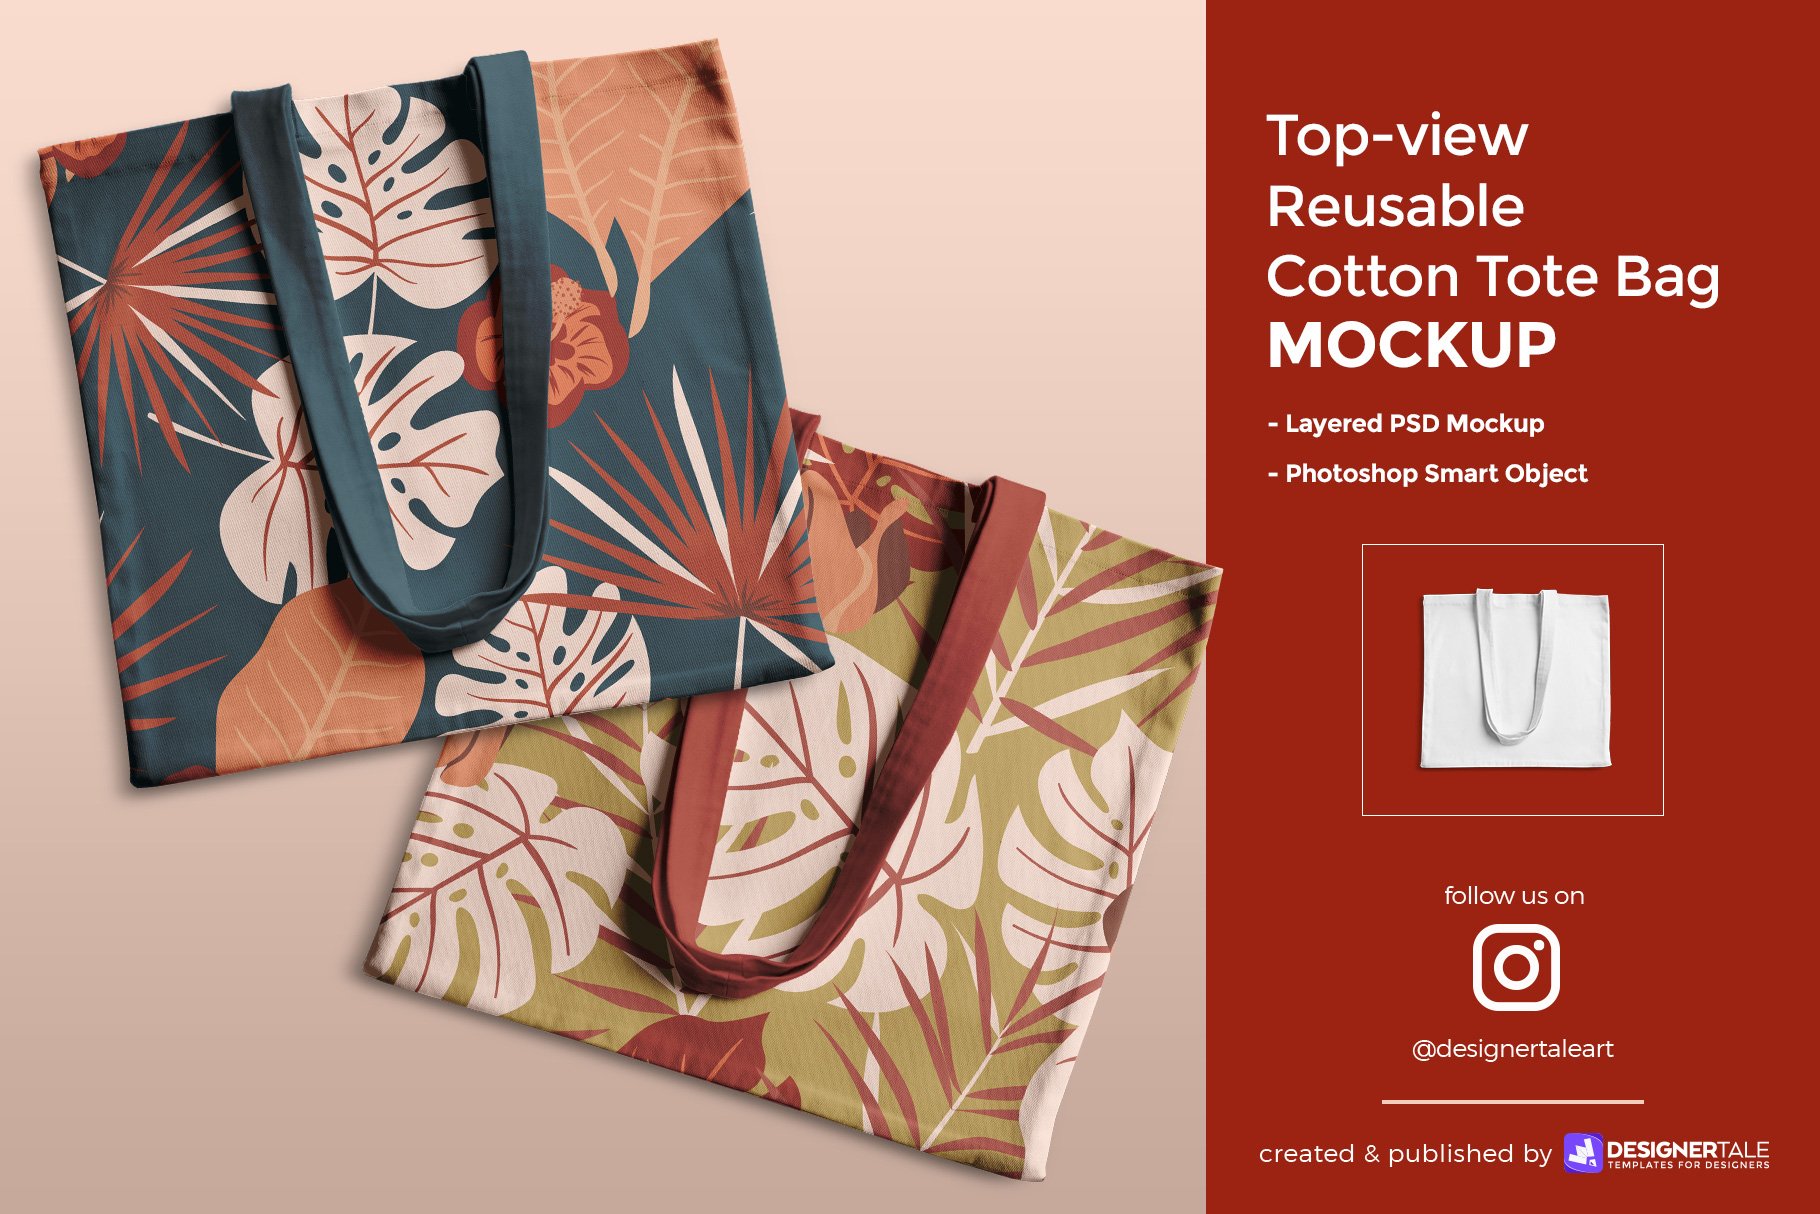 Top-view Reusable Cotton Tote Bag Mockup